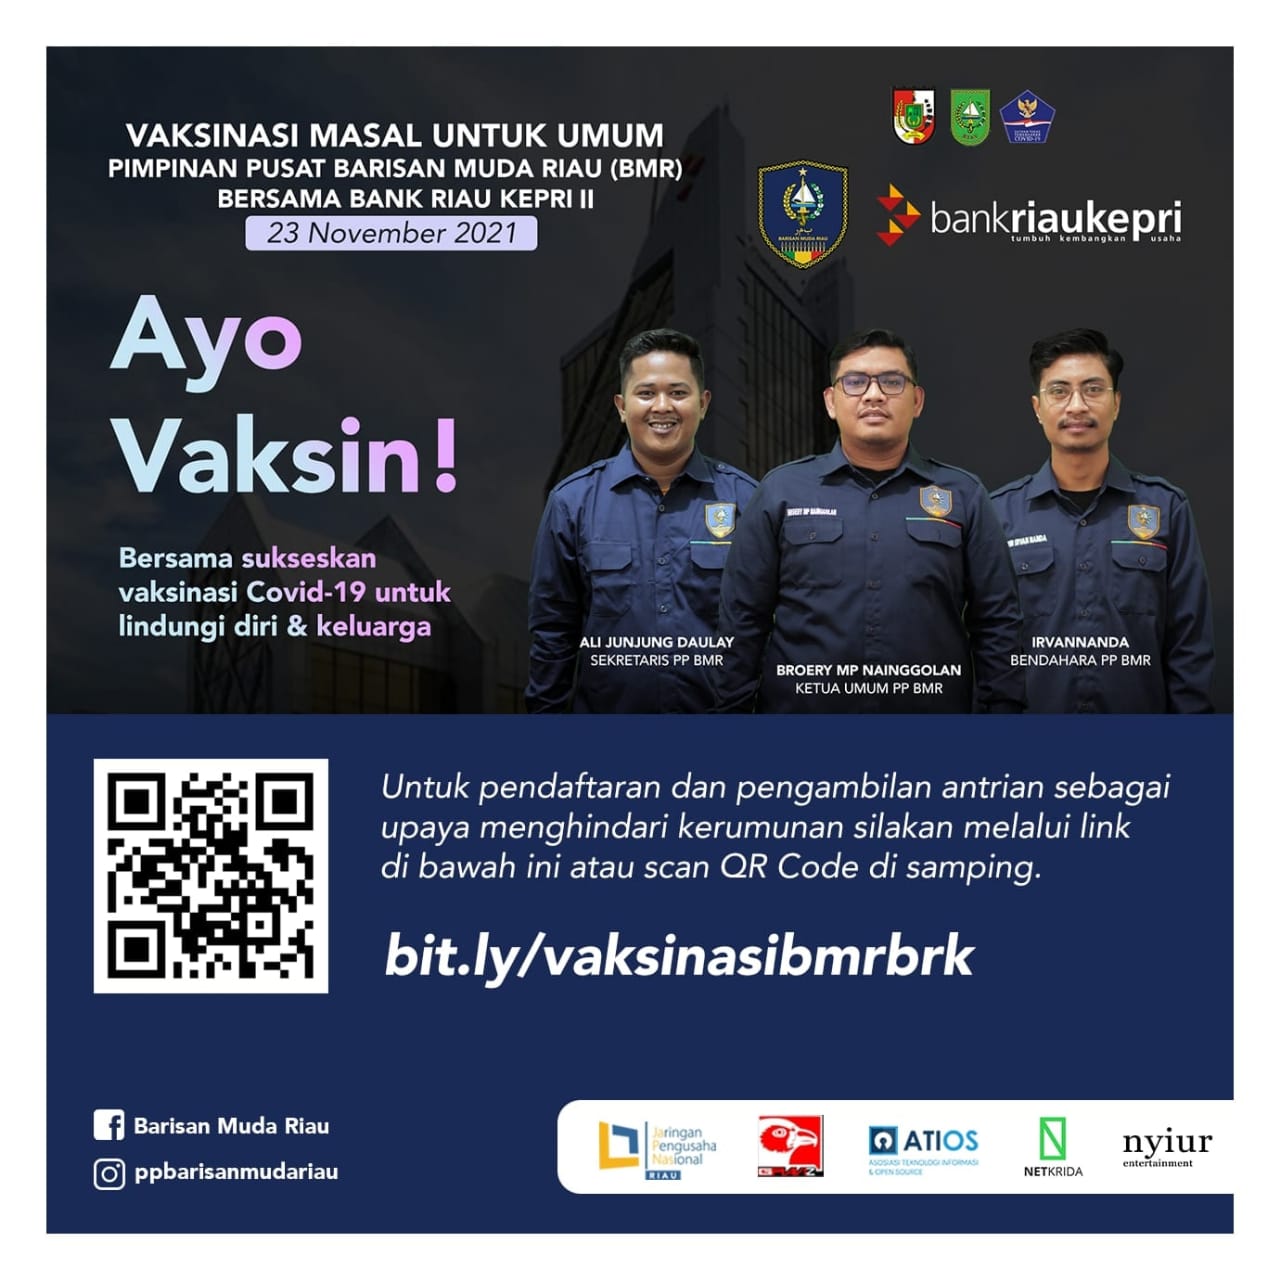 BMR & Bank Riau Kepri Kembali Gelar Vaksinasi Massal Tahap 2 Sebanayk 500 Dosis